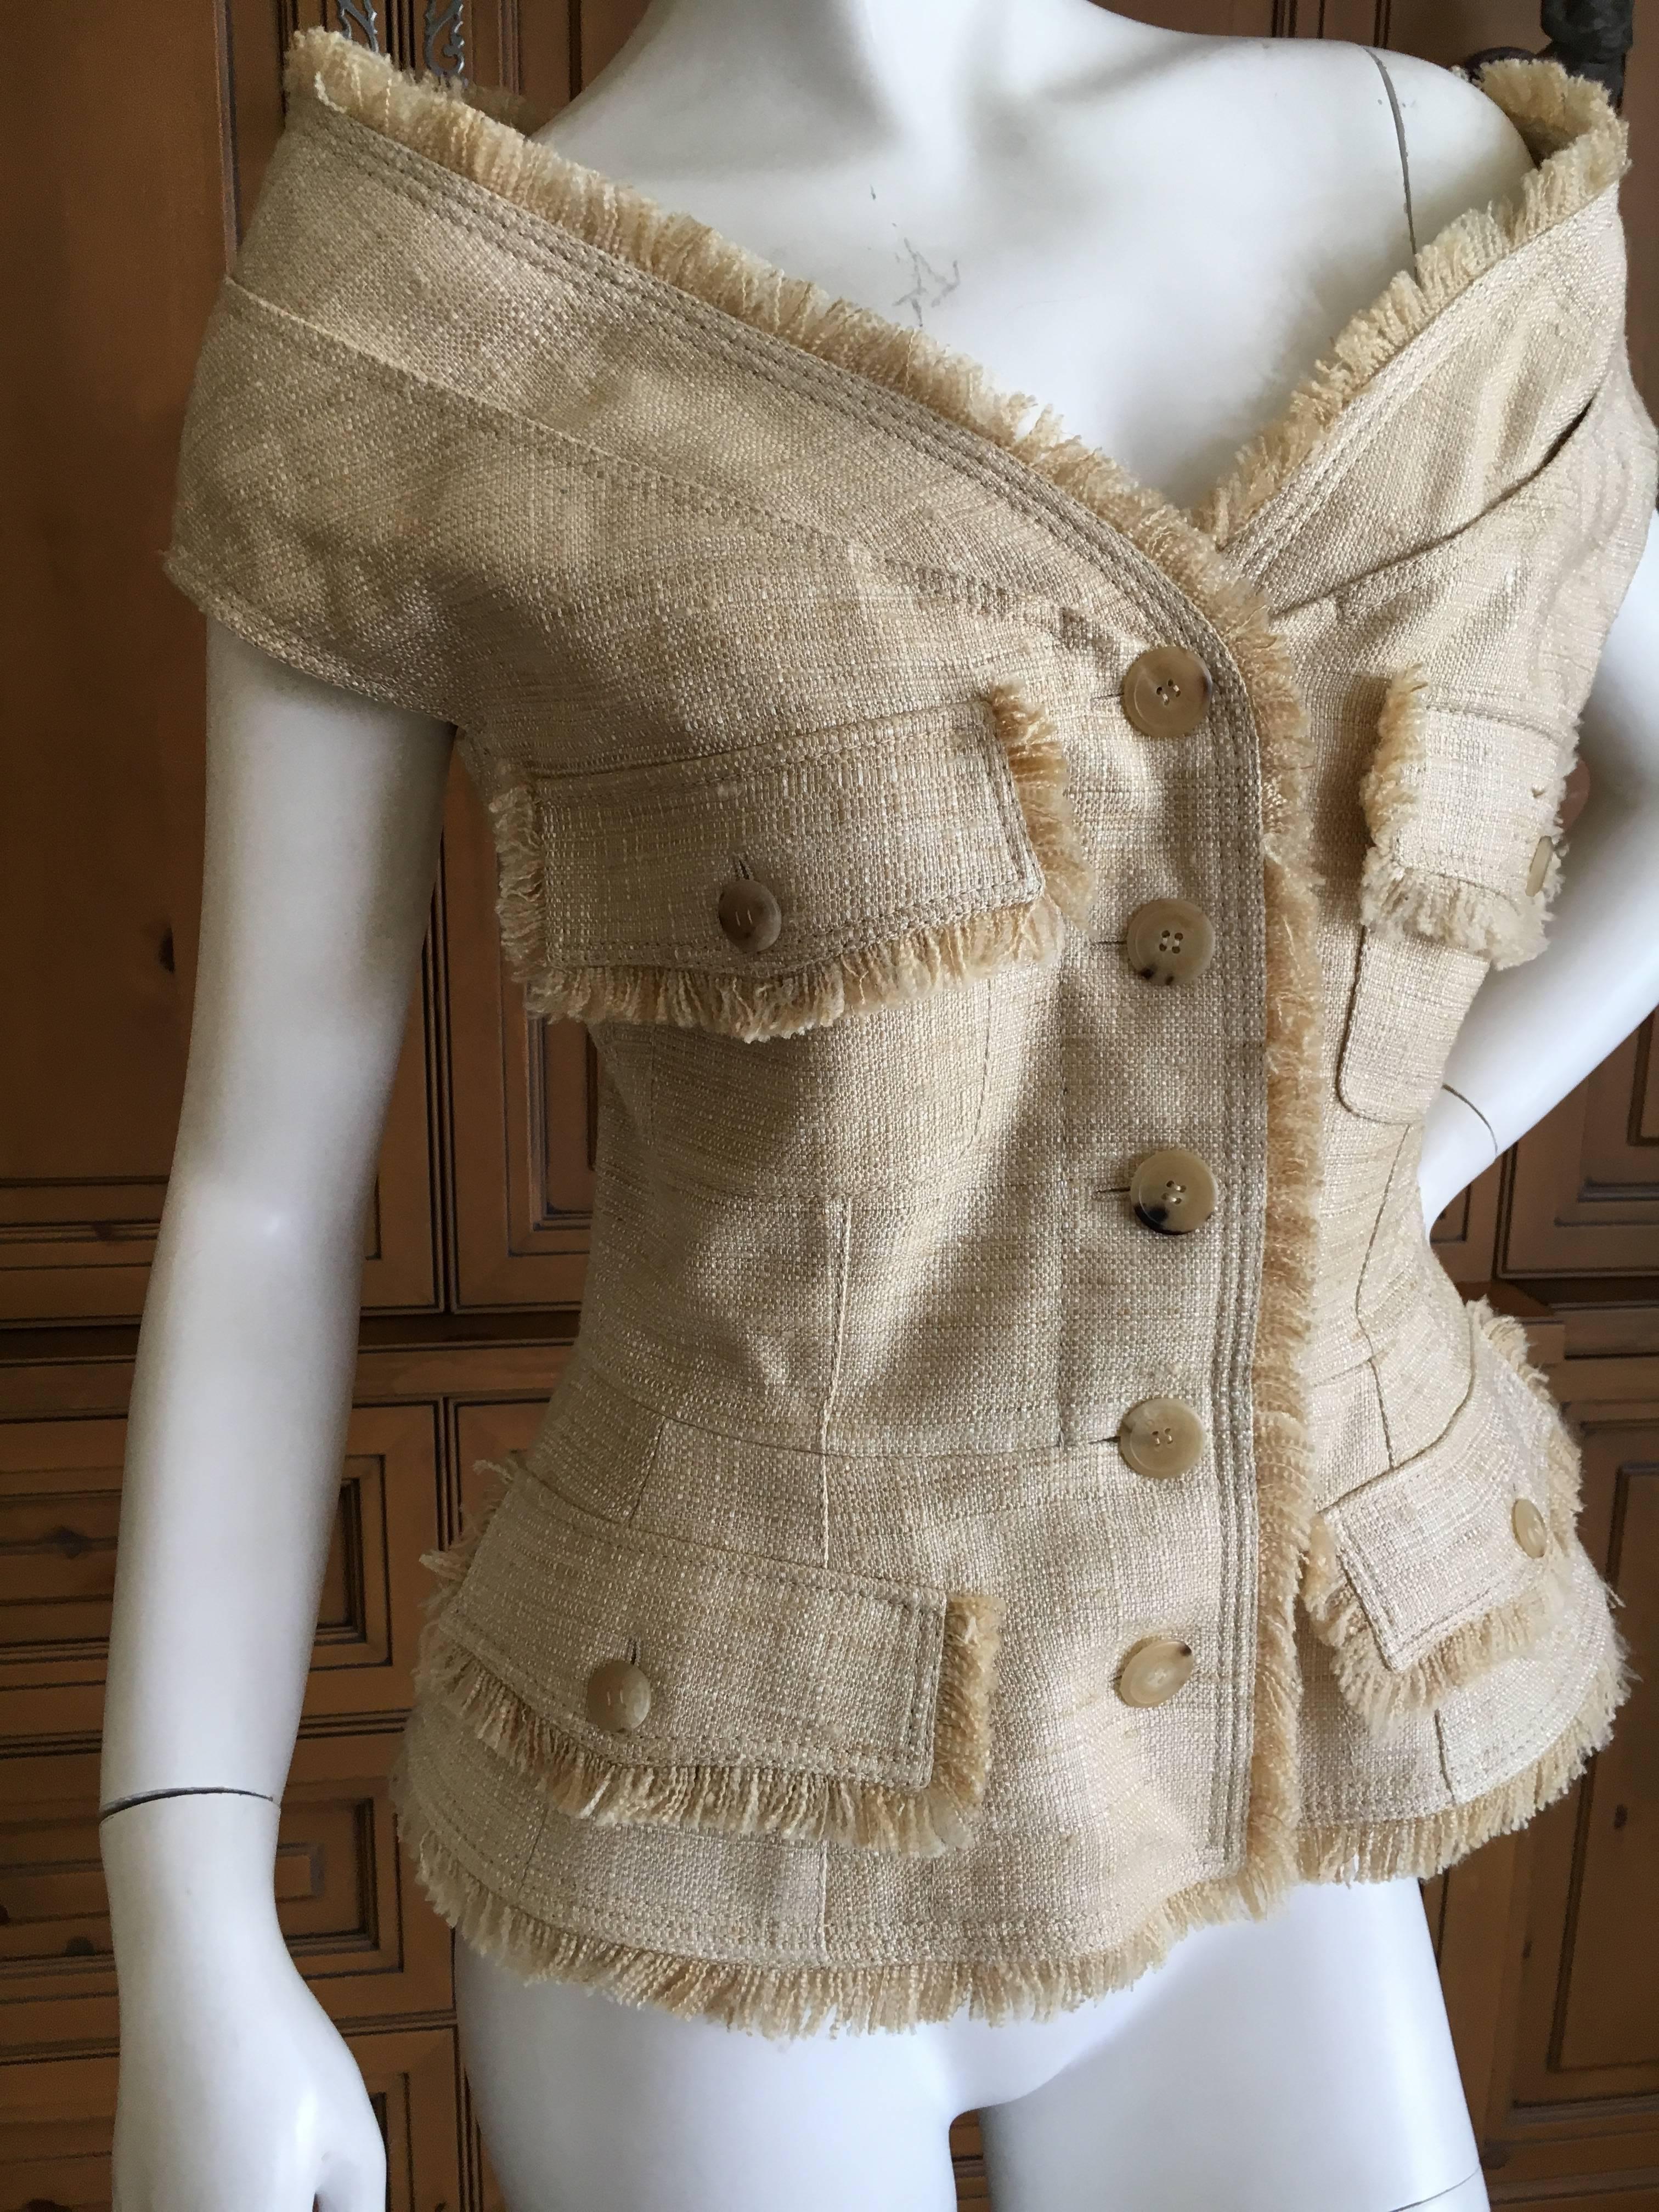 John Galliano for Christian Dior Silk & Linen Off the Shoulder Sleeveless Jacket.
Size 40
Bust 38